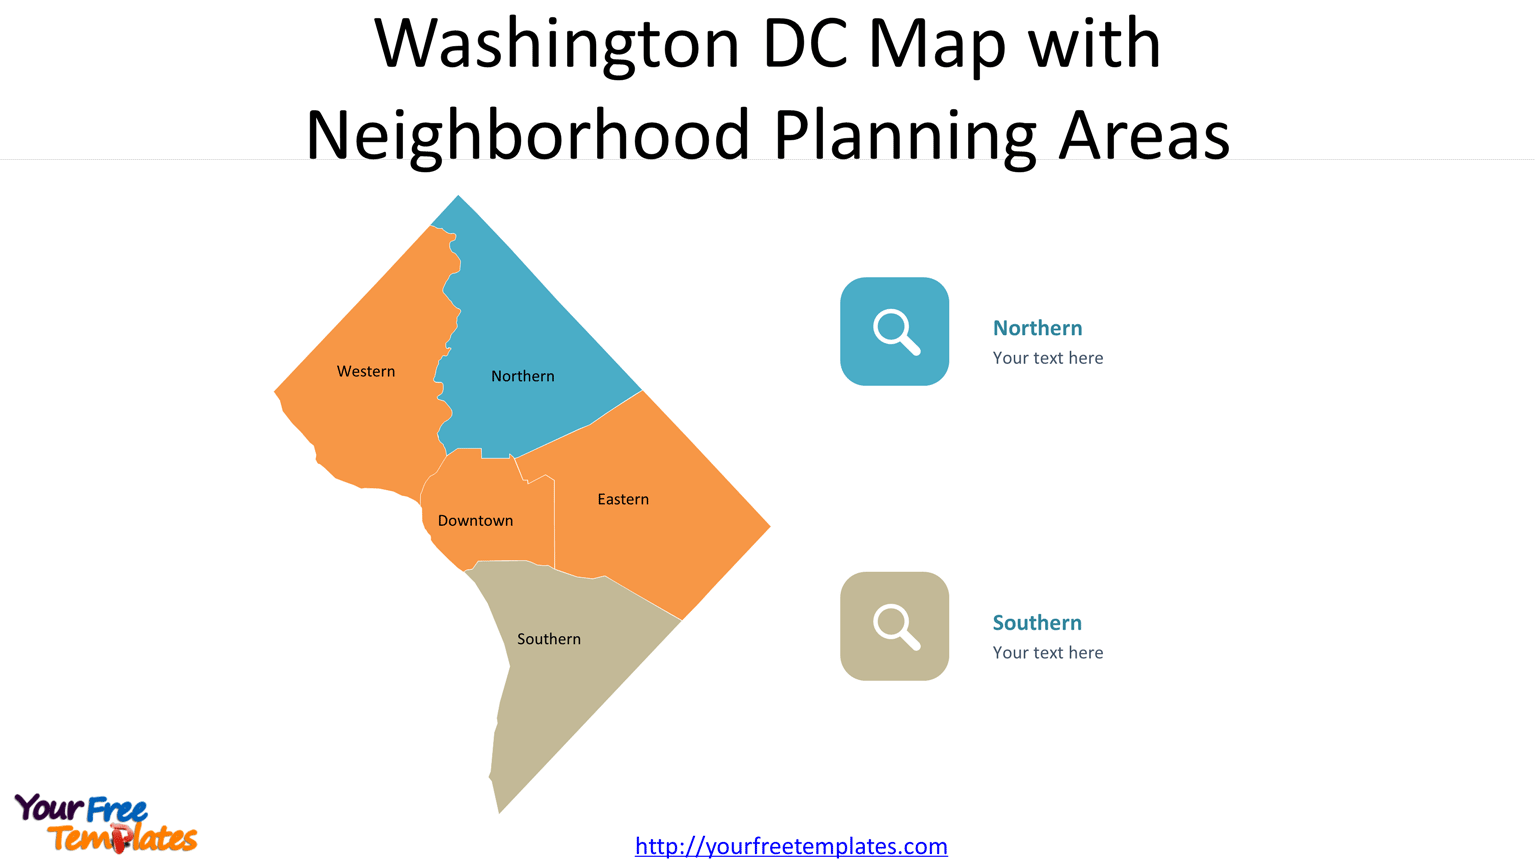 Washington DC Map with Neighborhood Planning Areas